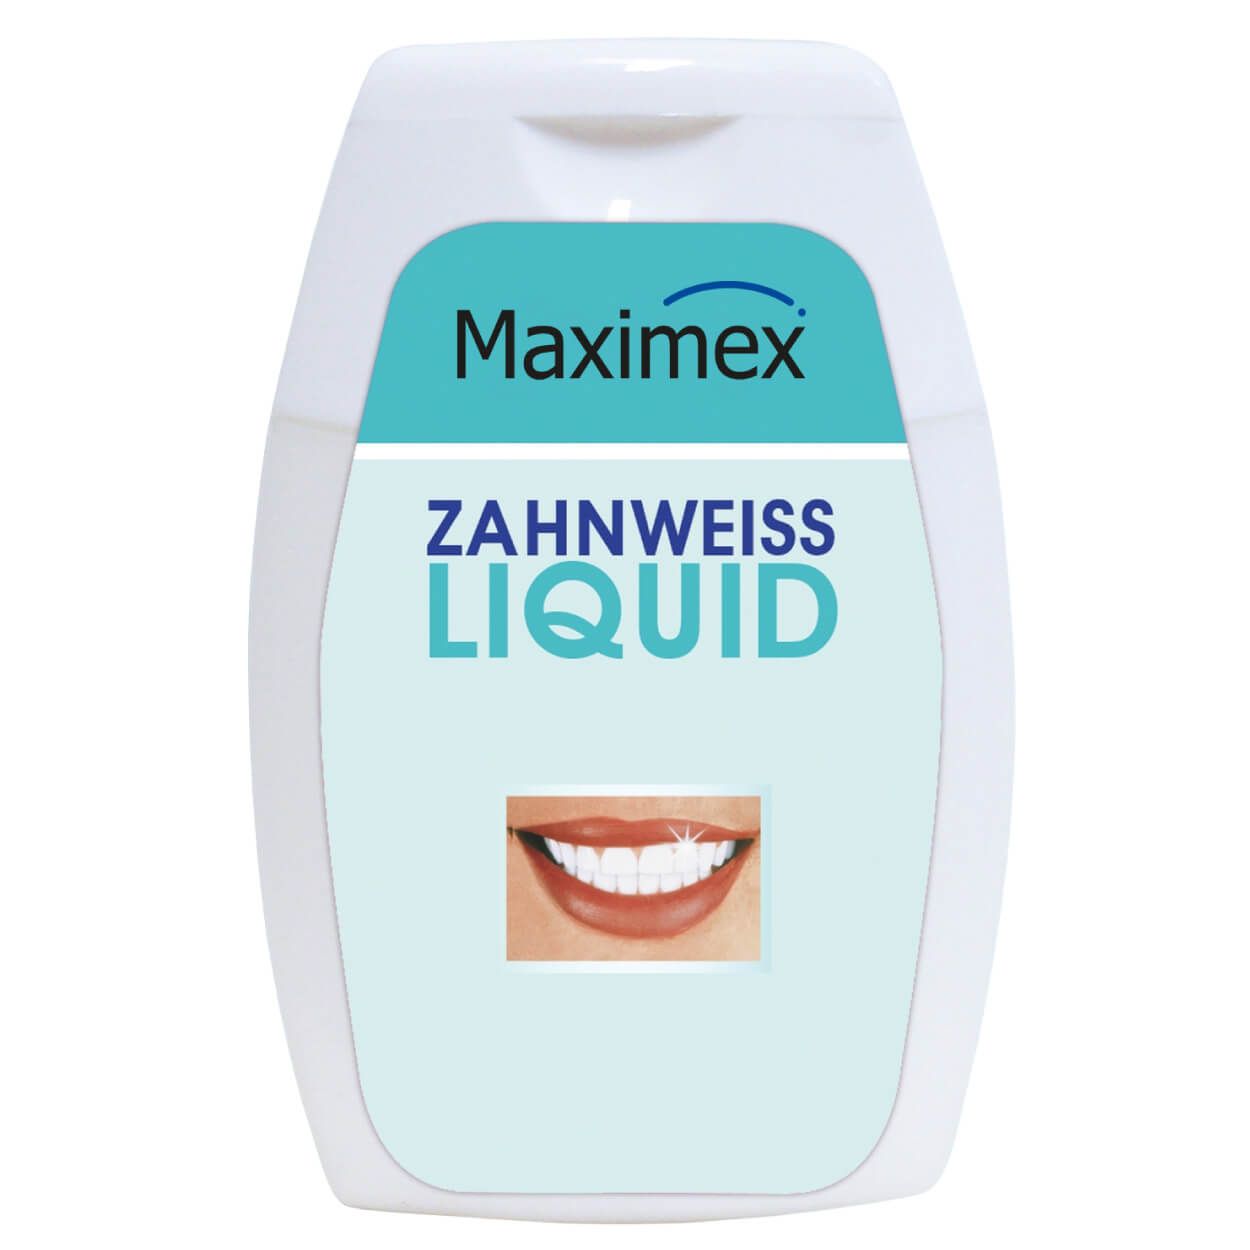 Zahnweiß-Liquid, 75 ml